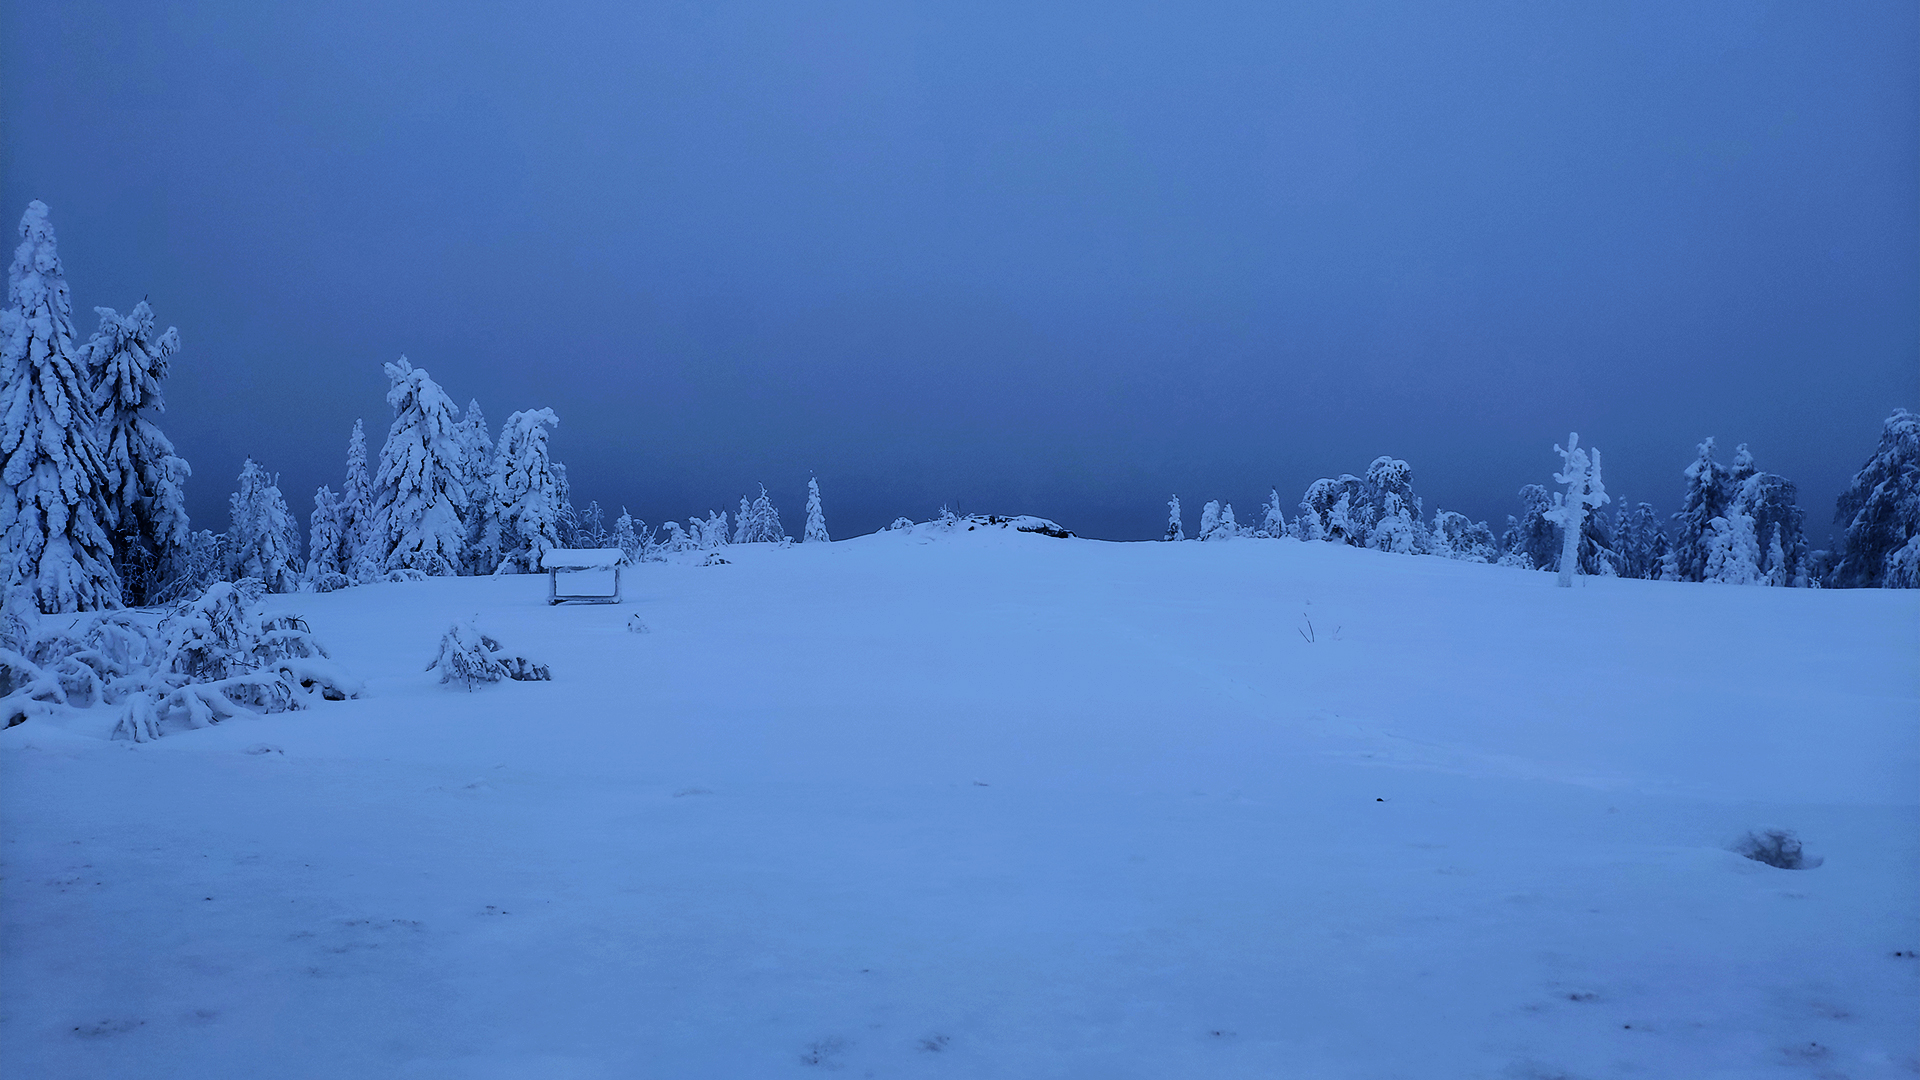 General 1920x1080 nature winter sky snow blue night trees landscape